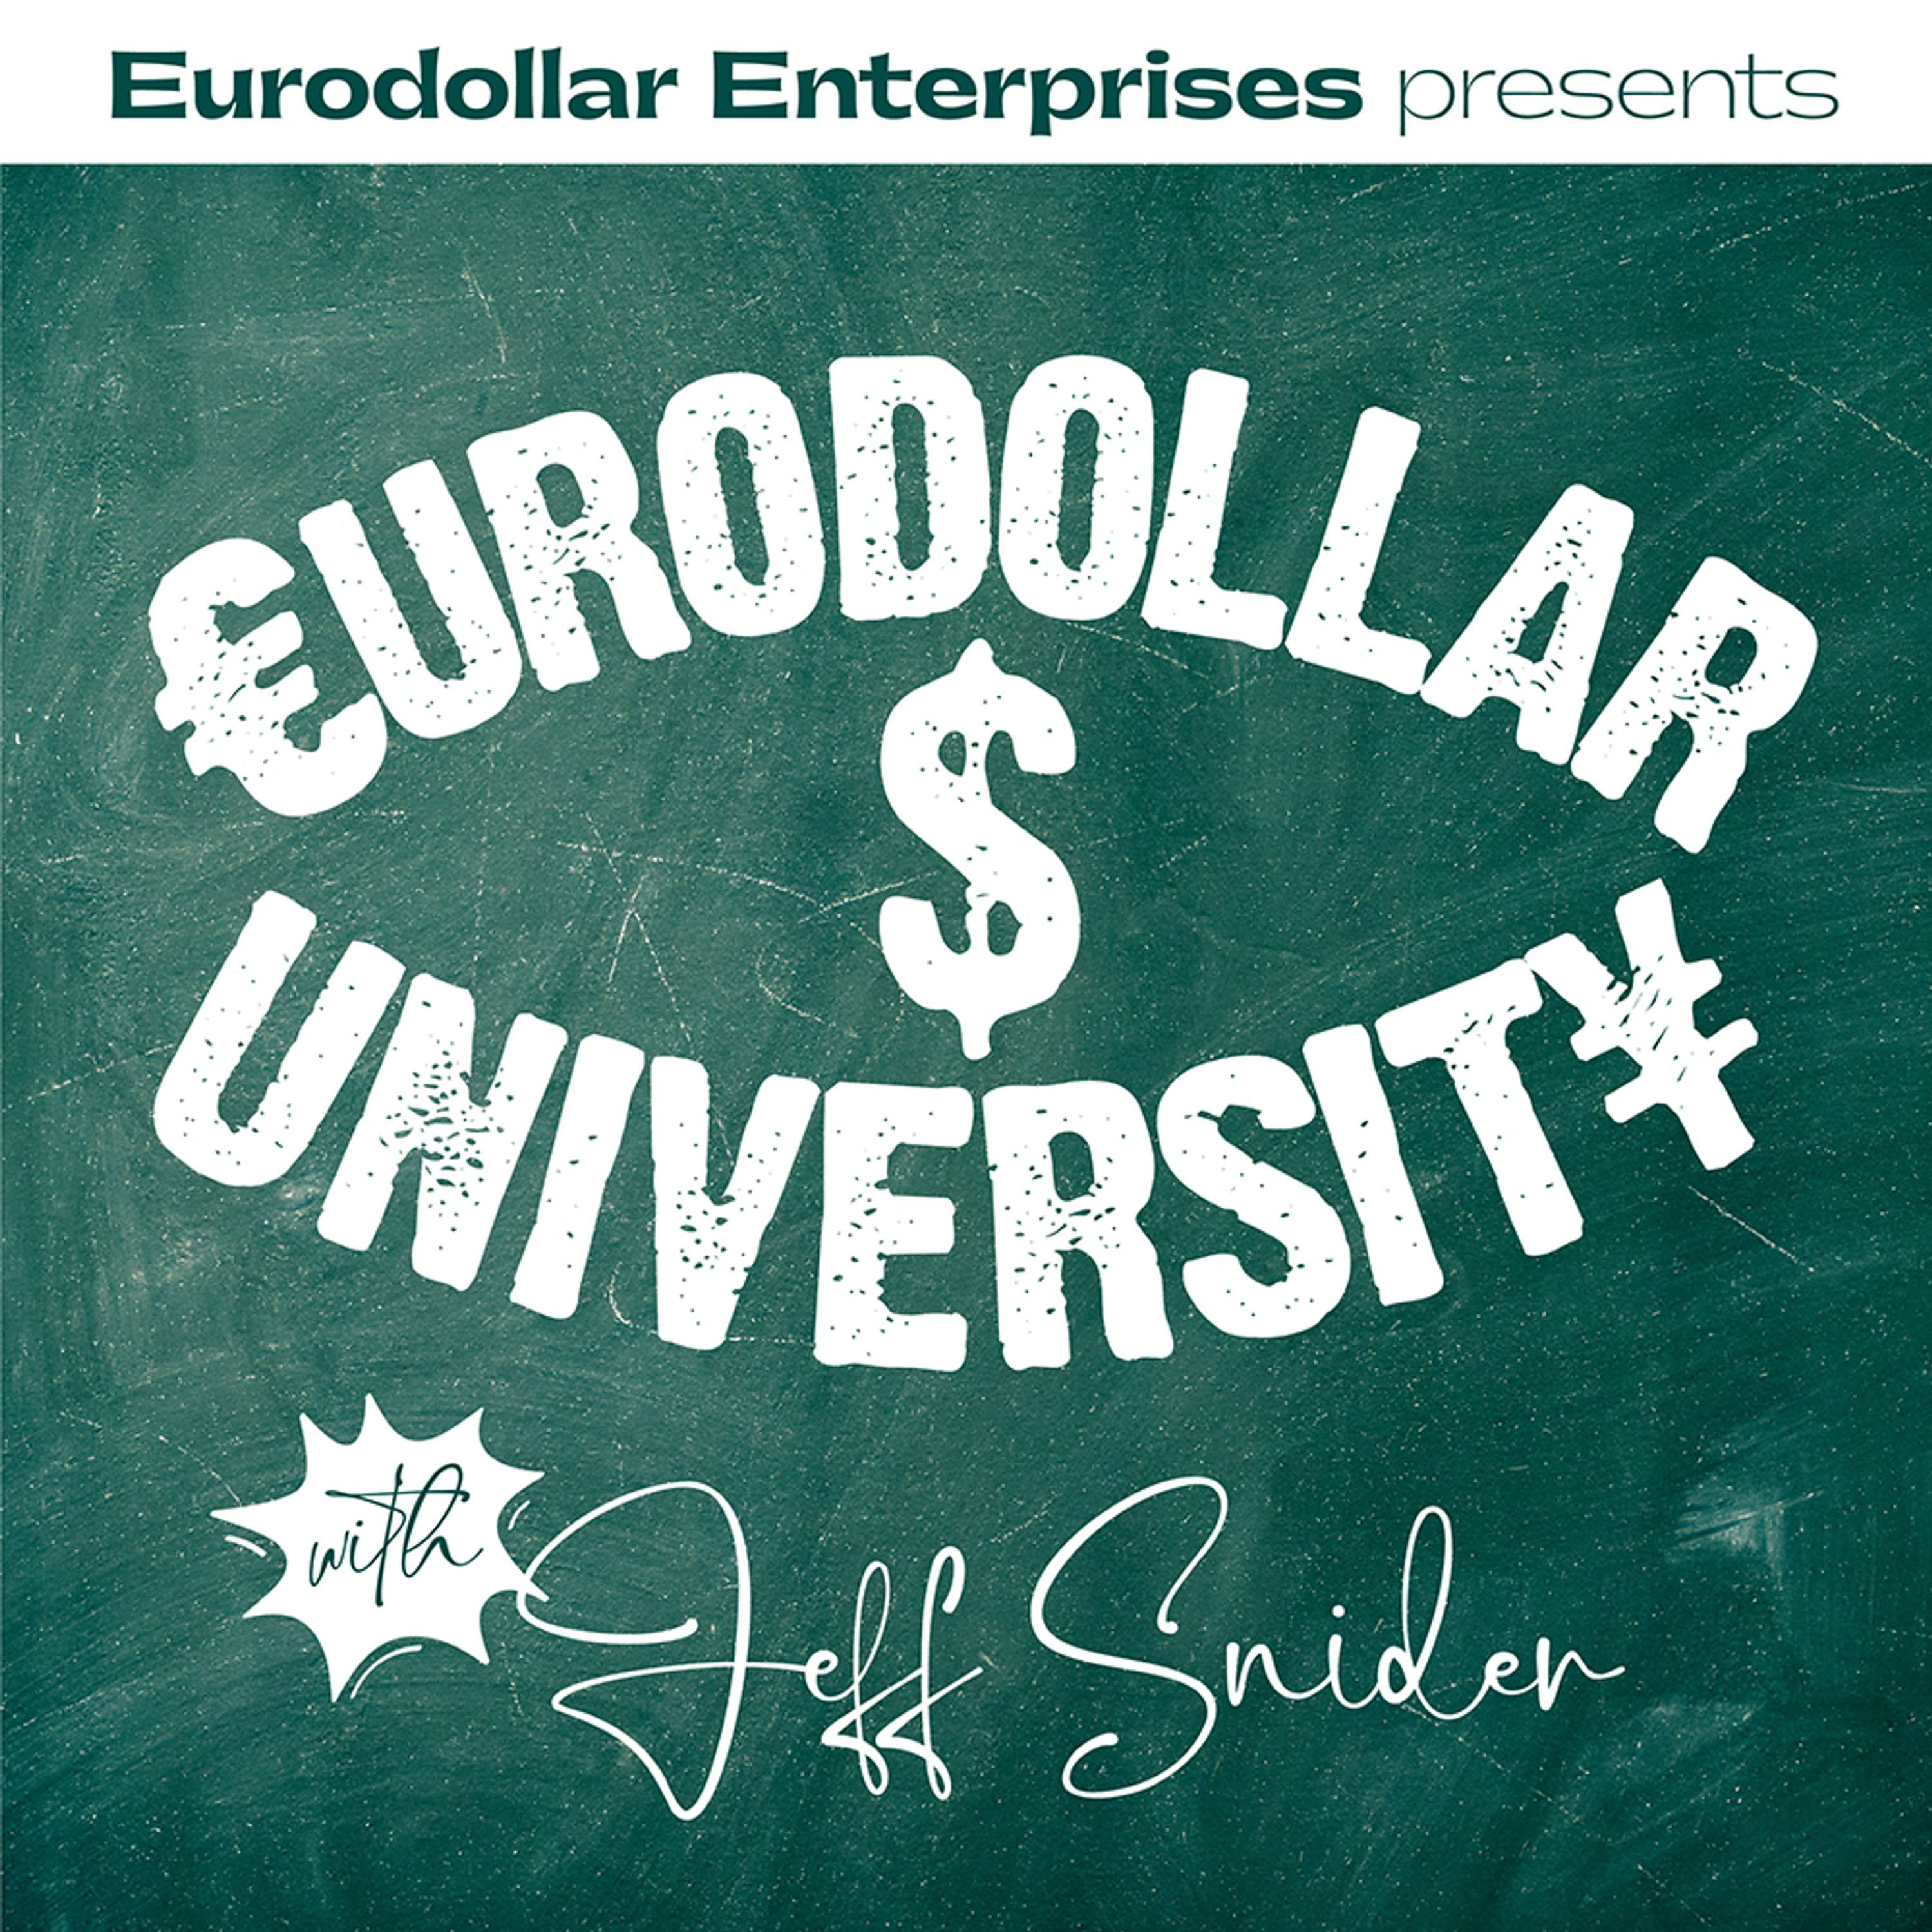 Michael Green: Nobody Wants Jeff Snider to Win! [Eurodollar University, Ep. 216]